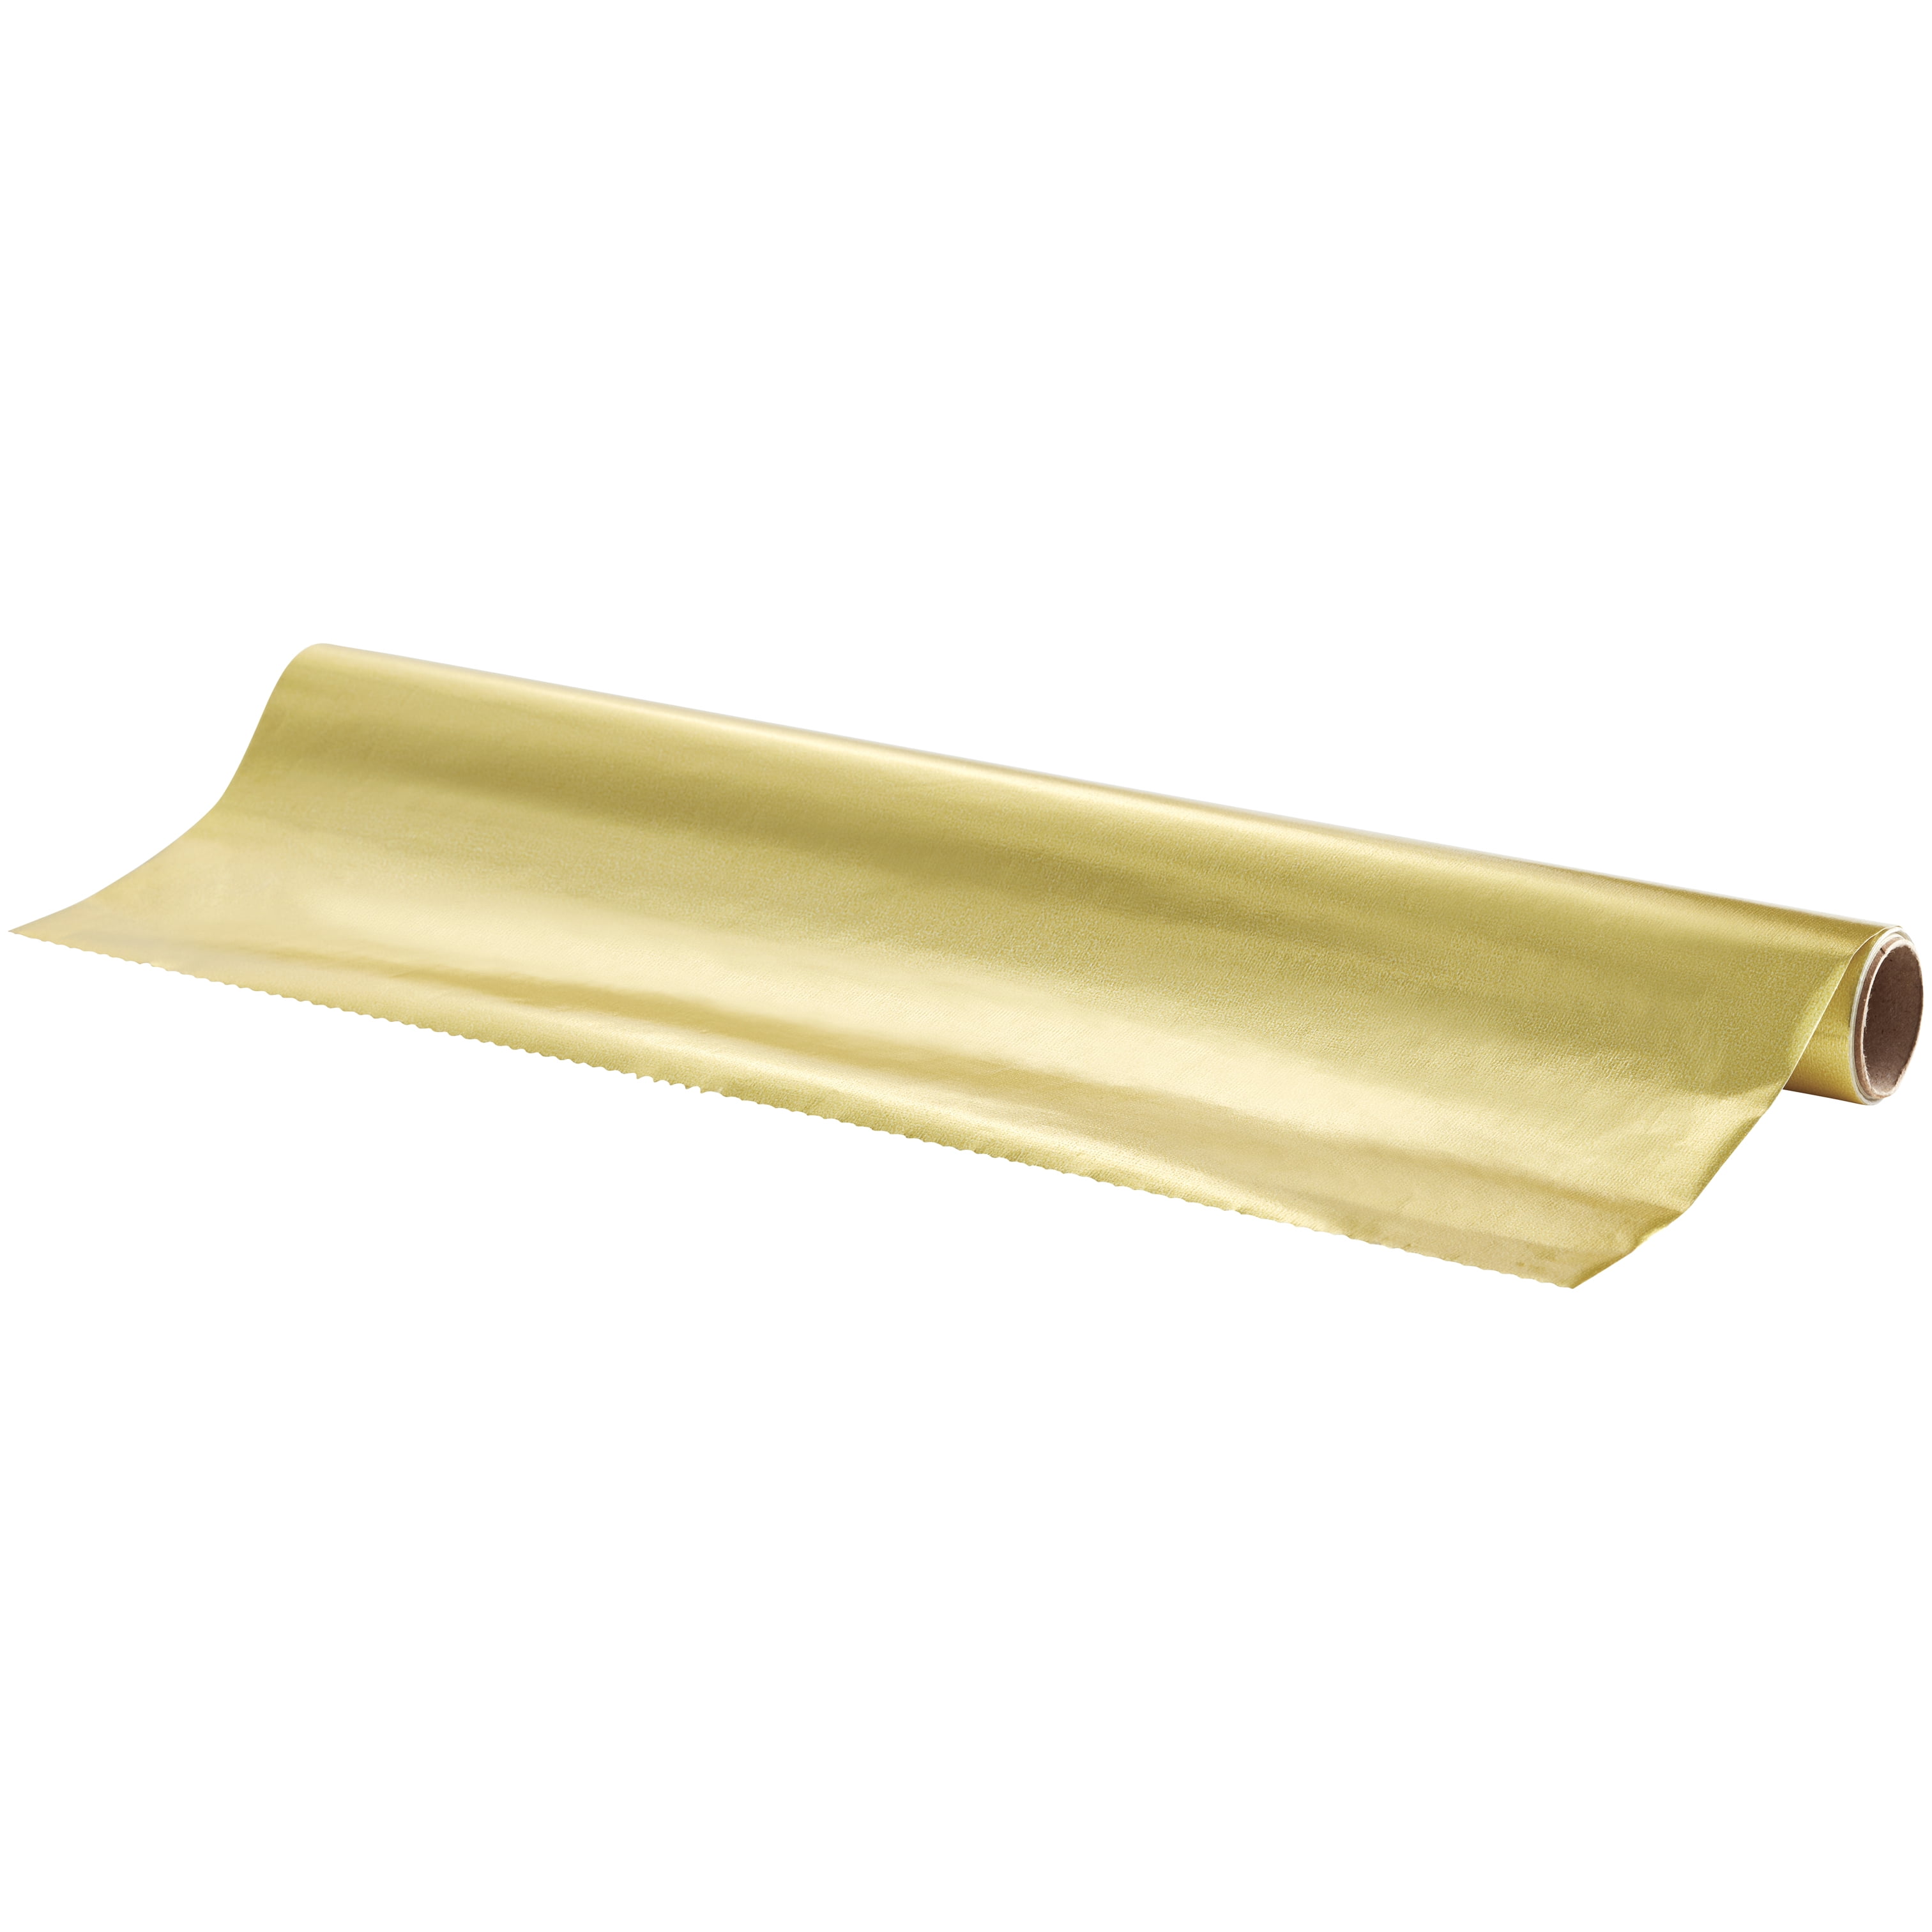 Wilton 6-Inch Gold Foil Treat Sticks, 30-Count - 0.14 lbs